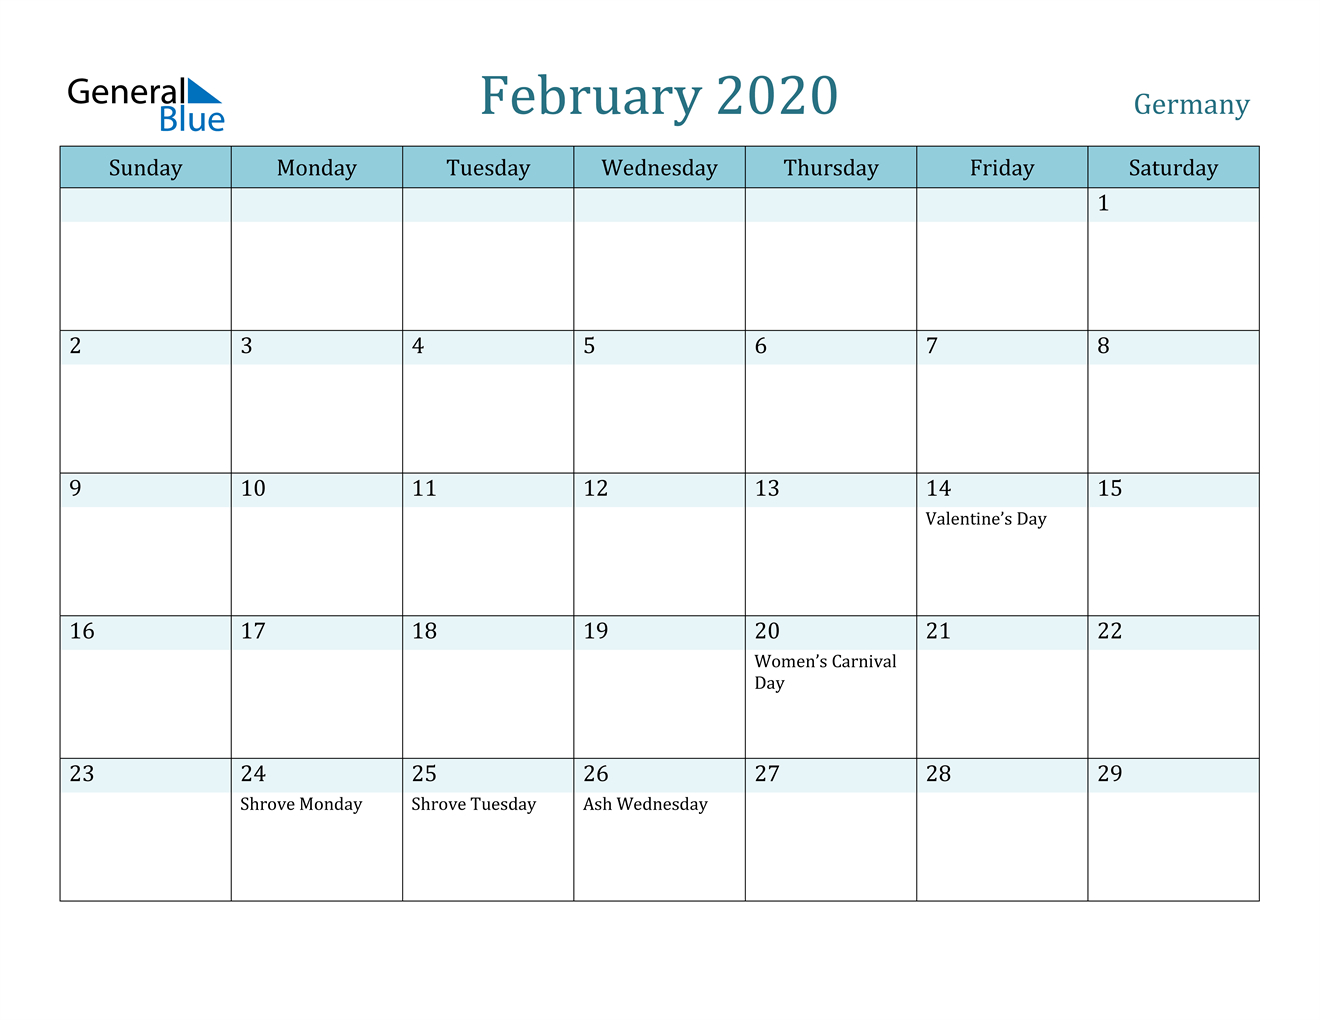 February 2020 Calendar - Germany